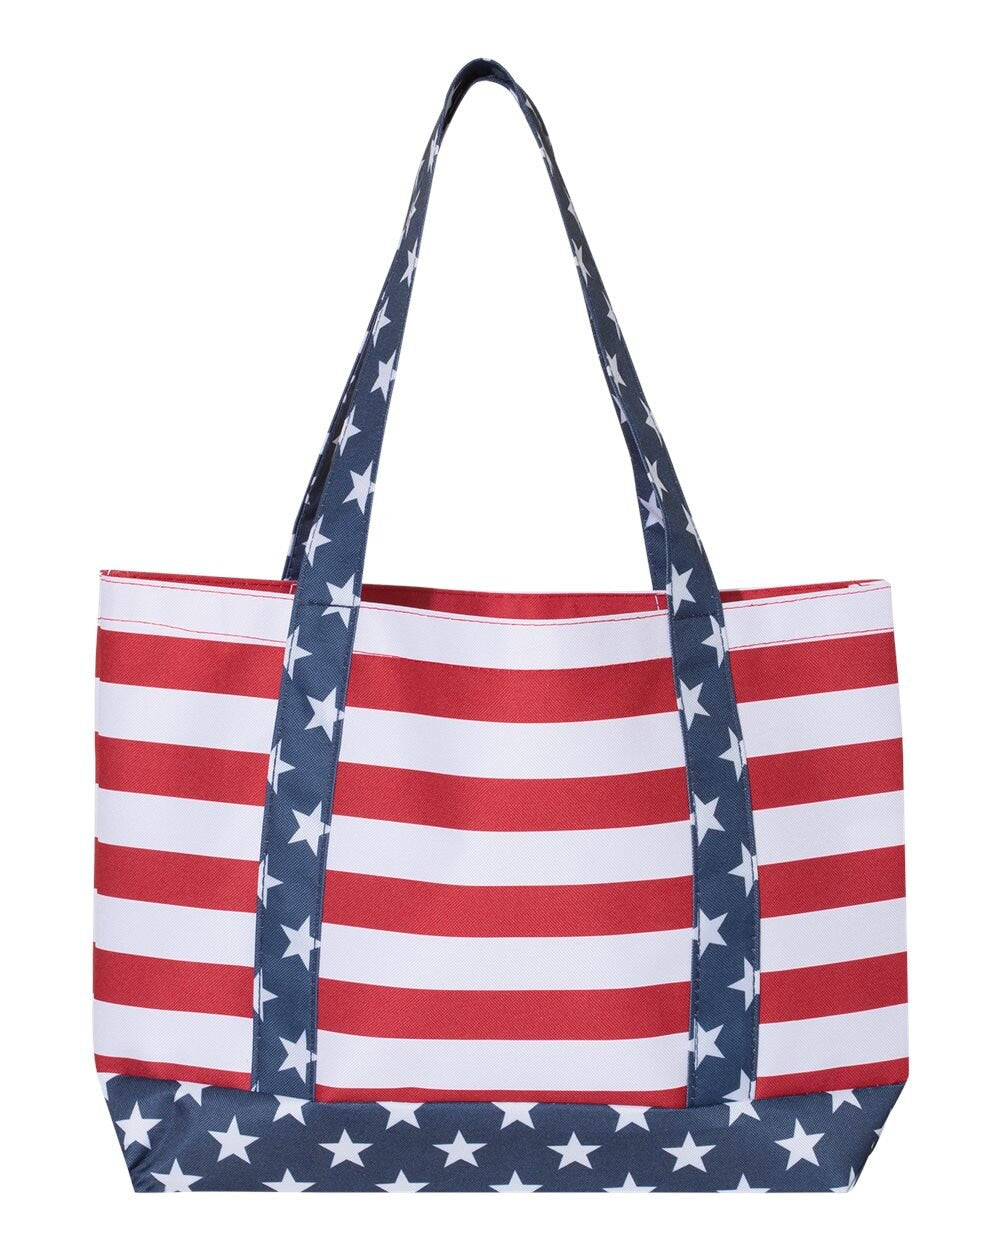 American Flag Tote Bag, Let Freedom Ring, Summer Beach Bag, Patriotic Beach Bag, Stars&Stripes, Pool Bag, Lake Beach Bag Tote, Boating Tote